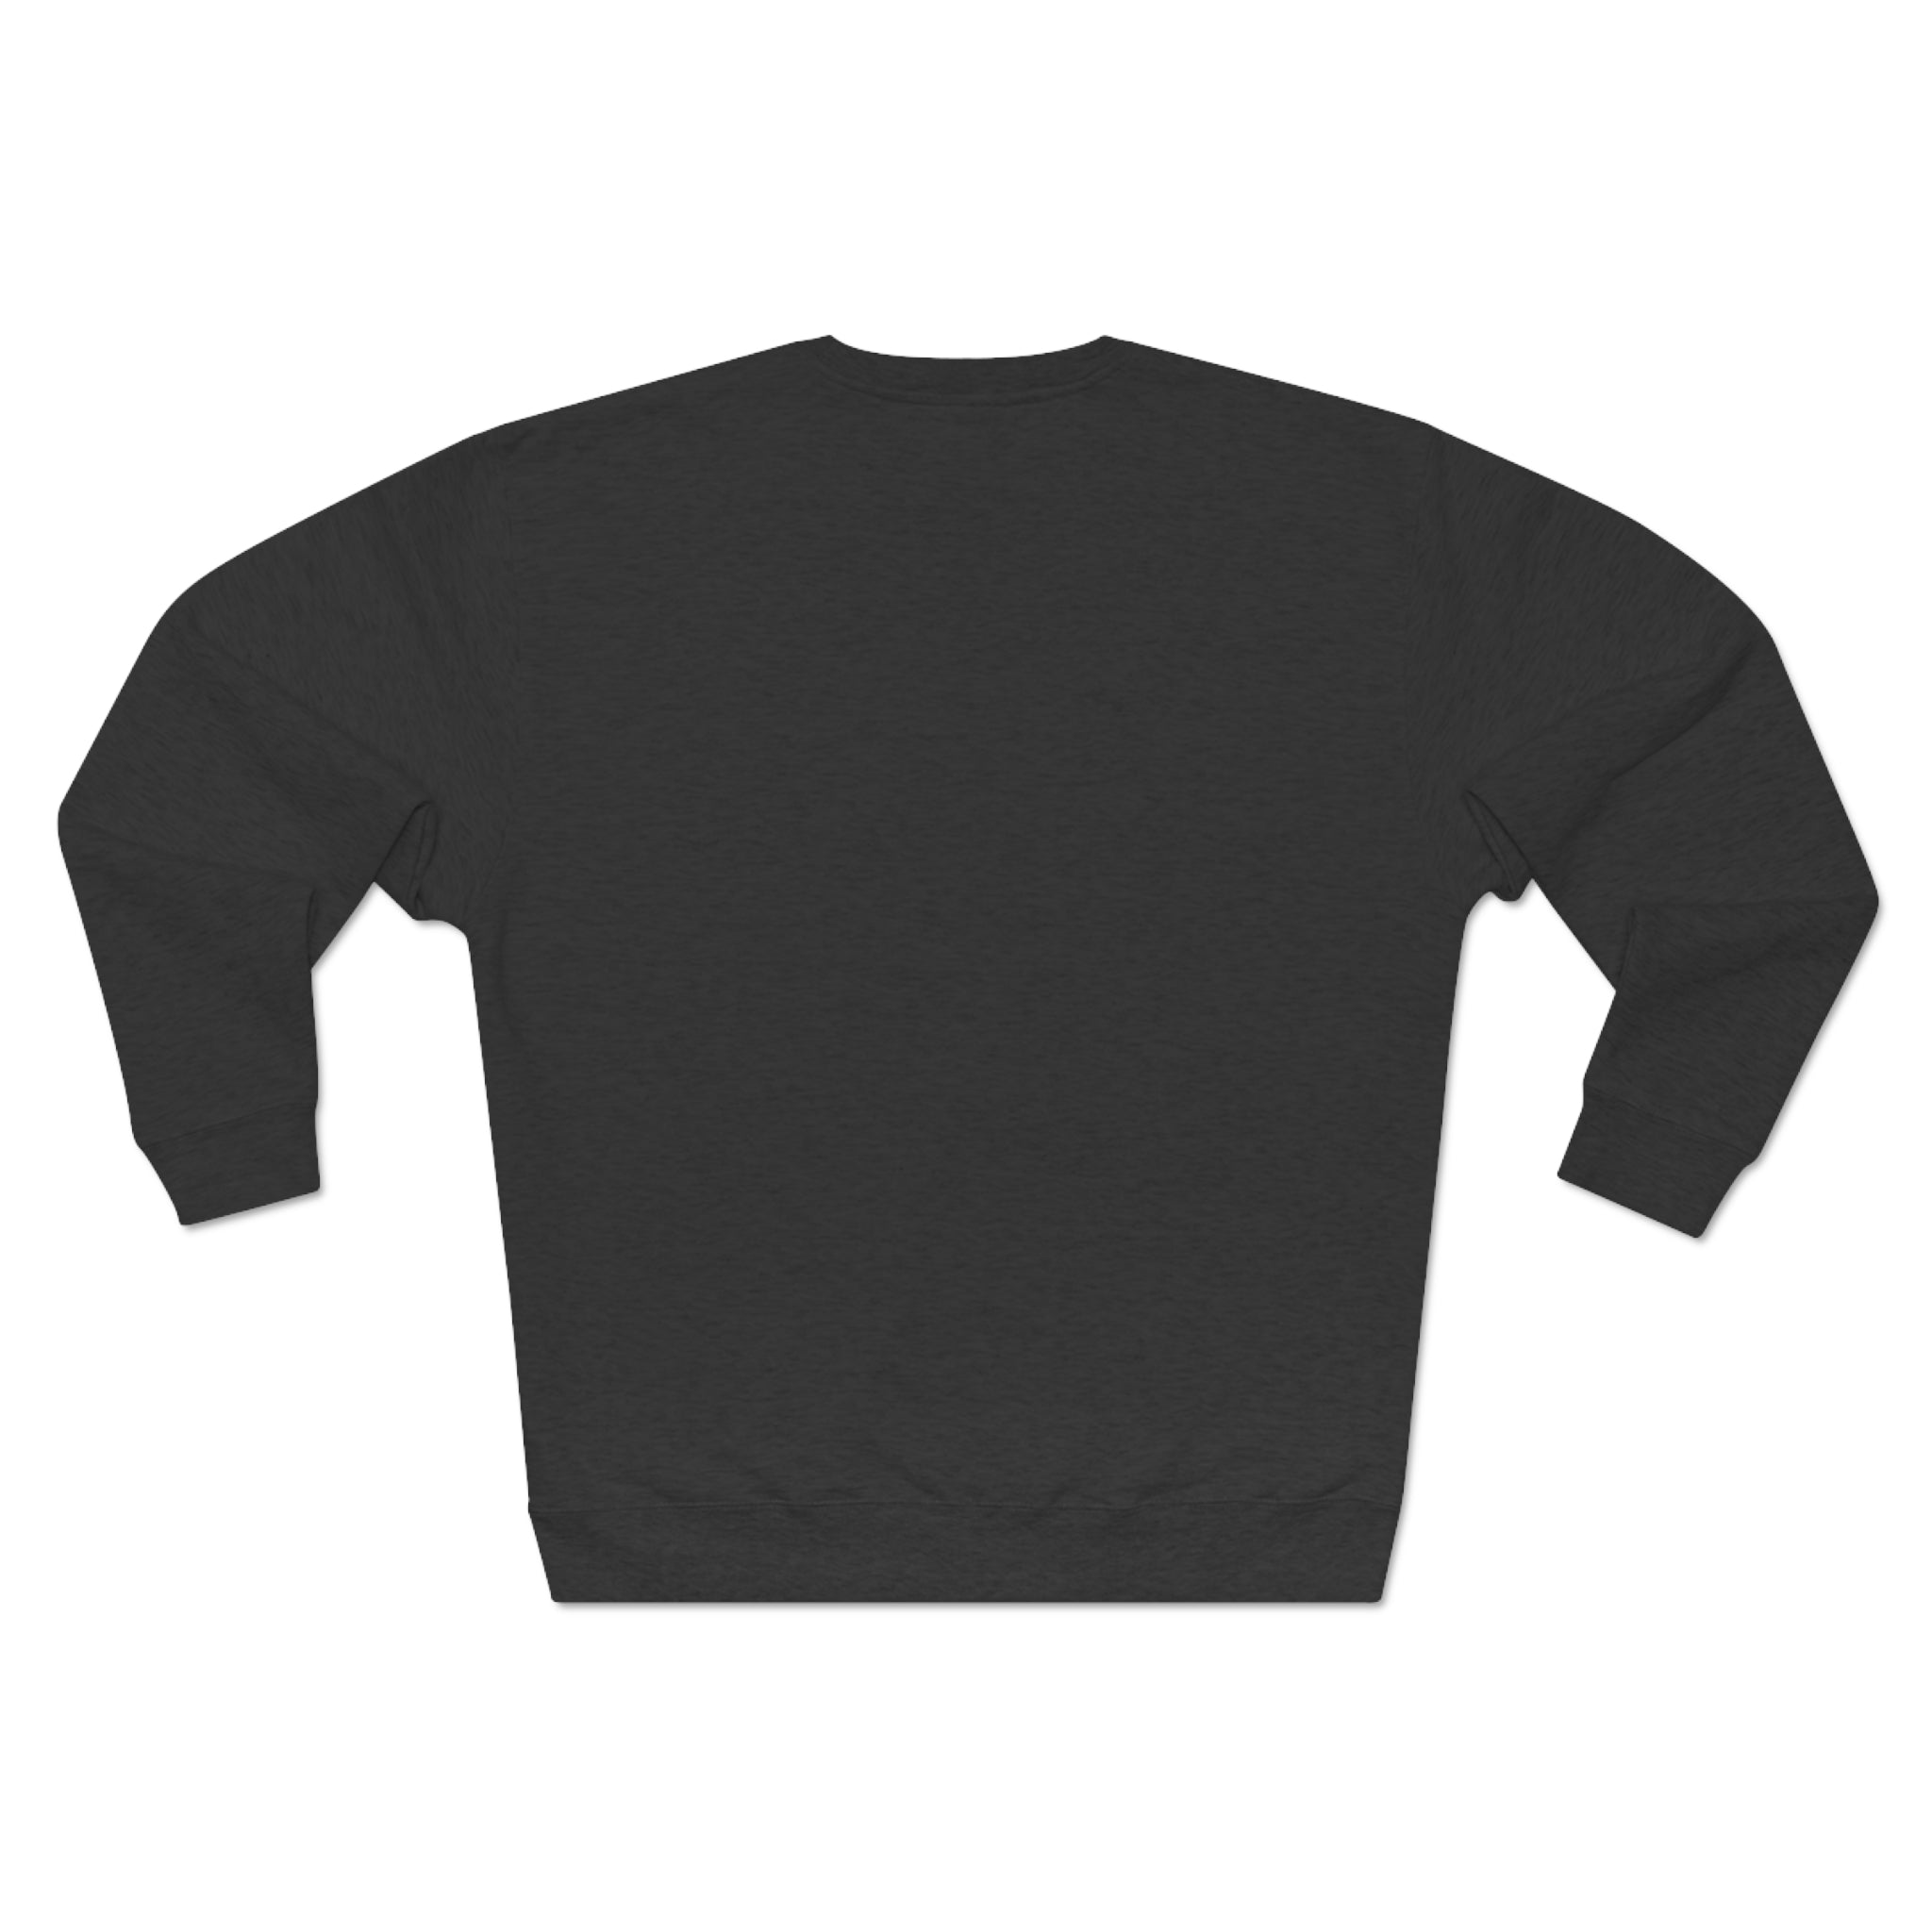 Crewneck Sweatshirt, One Side (Wake Forest Federalist Society)